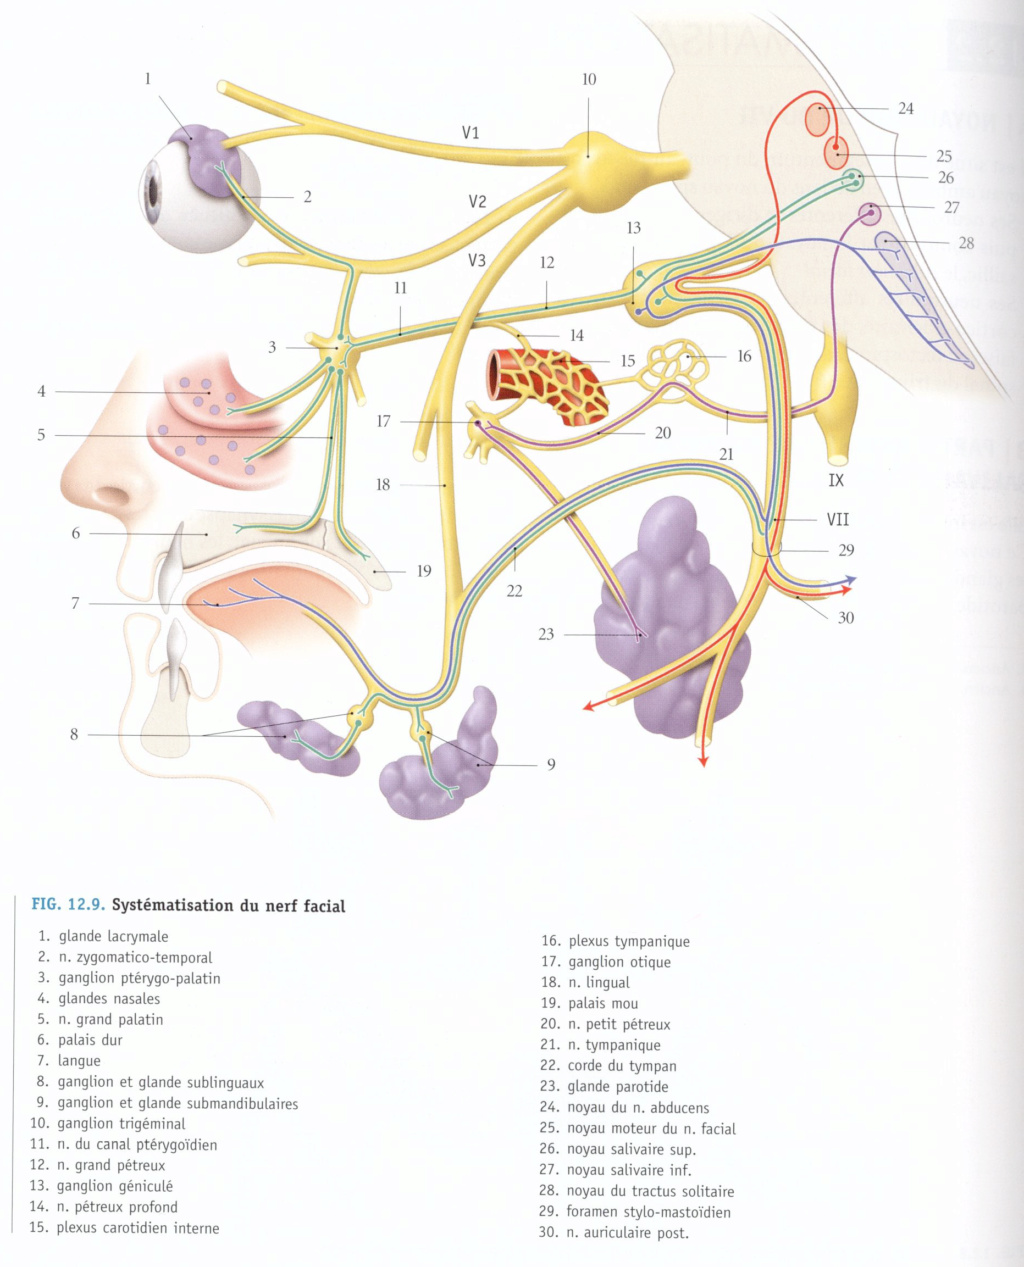 Corde du tympan et origine du nerf auriculo-temporal Vii11